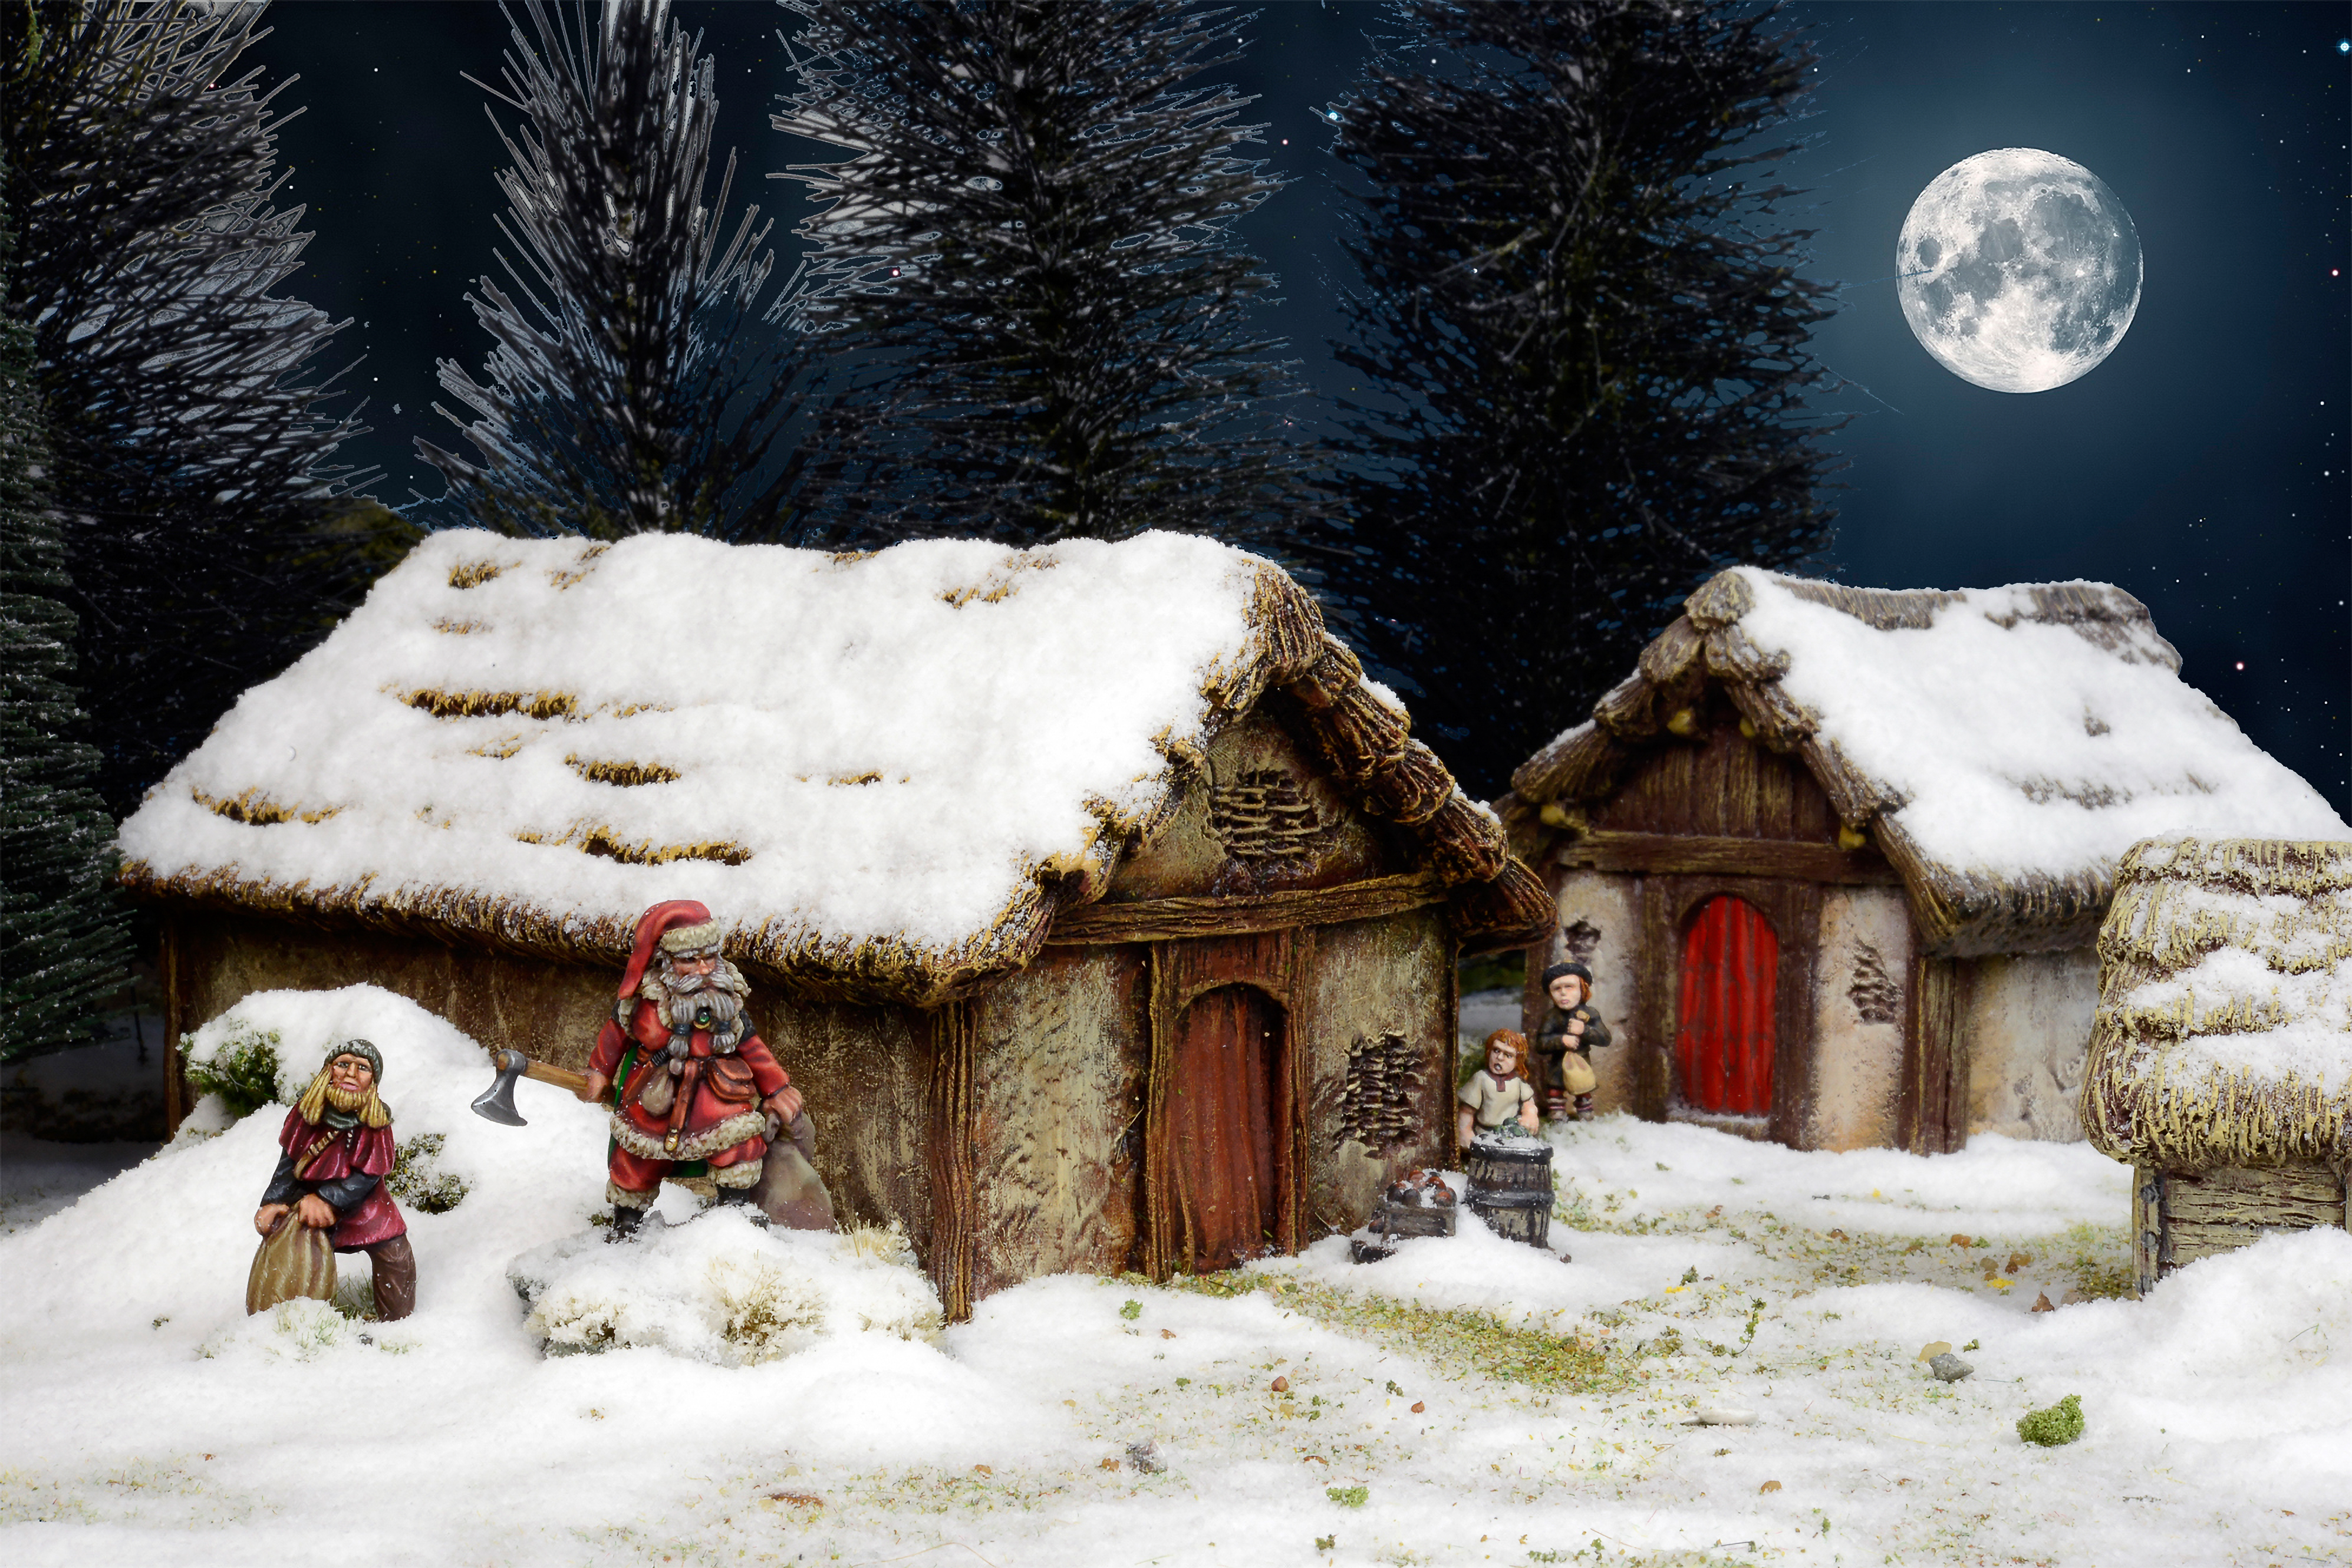 Wargaming Winter Wonderland, Wonderous Yuletide Wares (Christmas Gift Ideas)